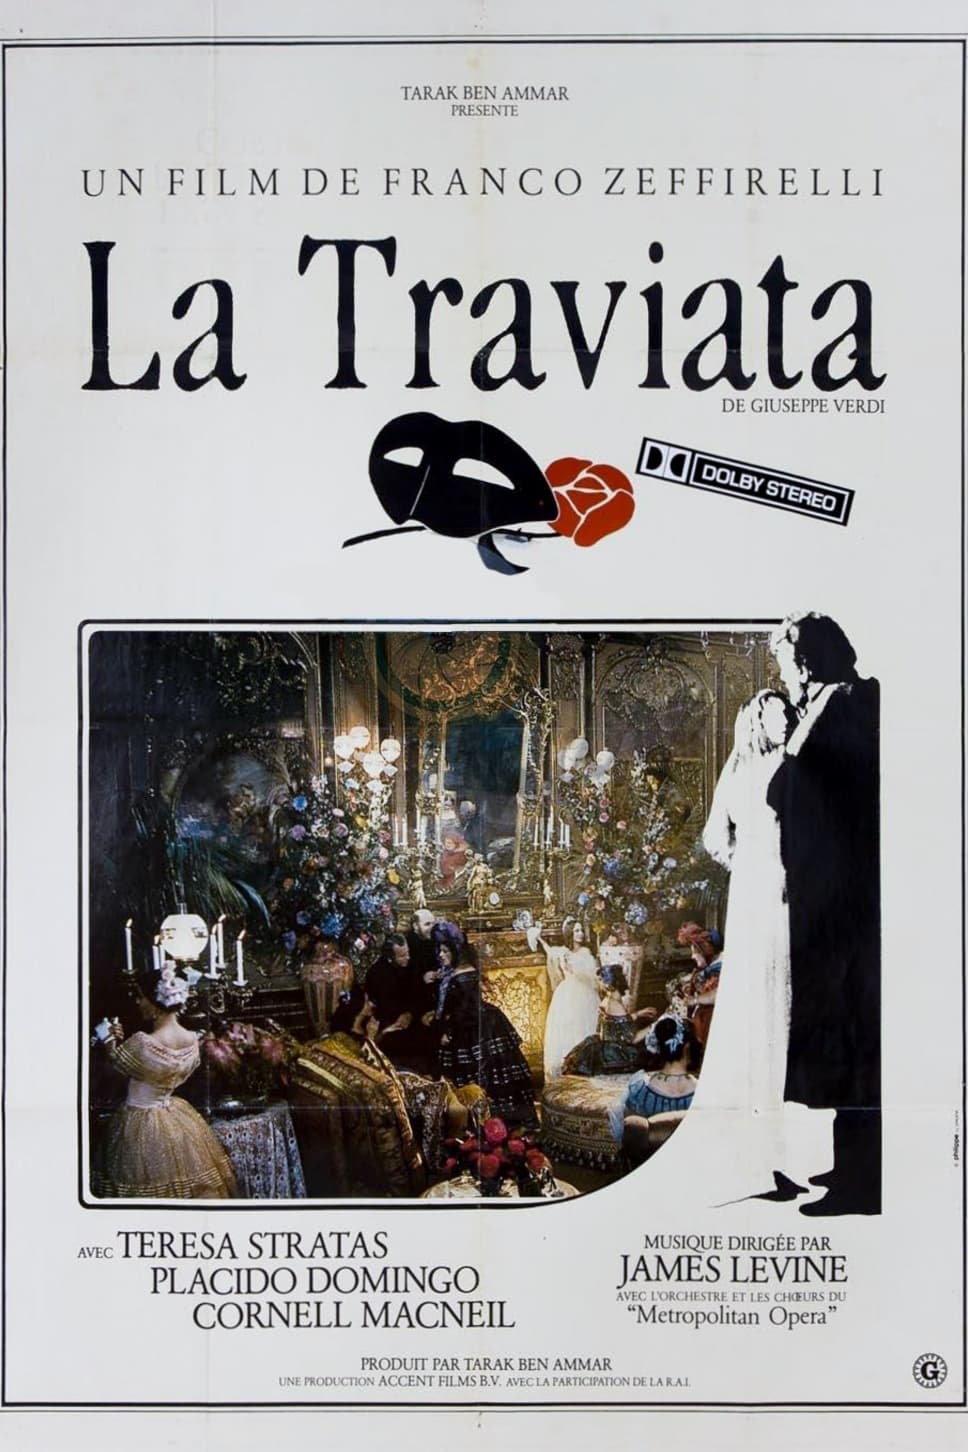 Affiche du film "La traviata"